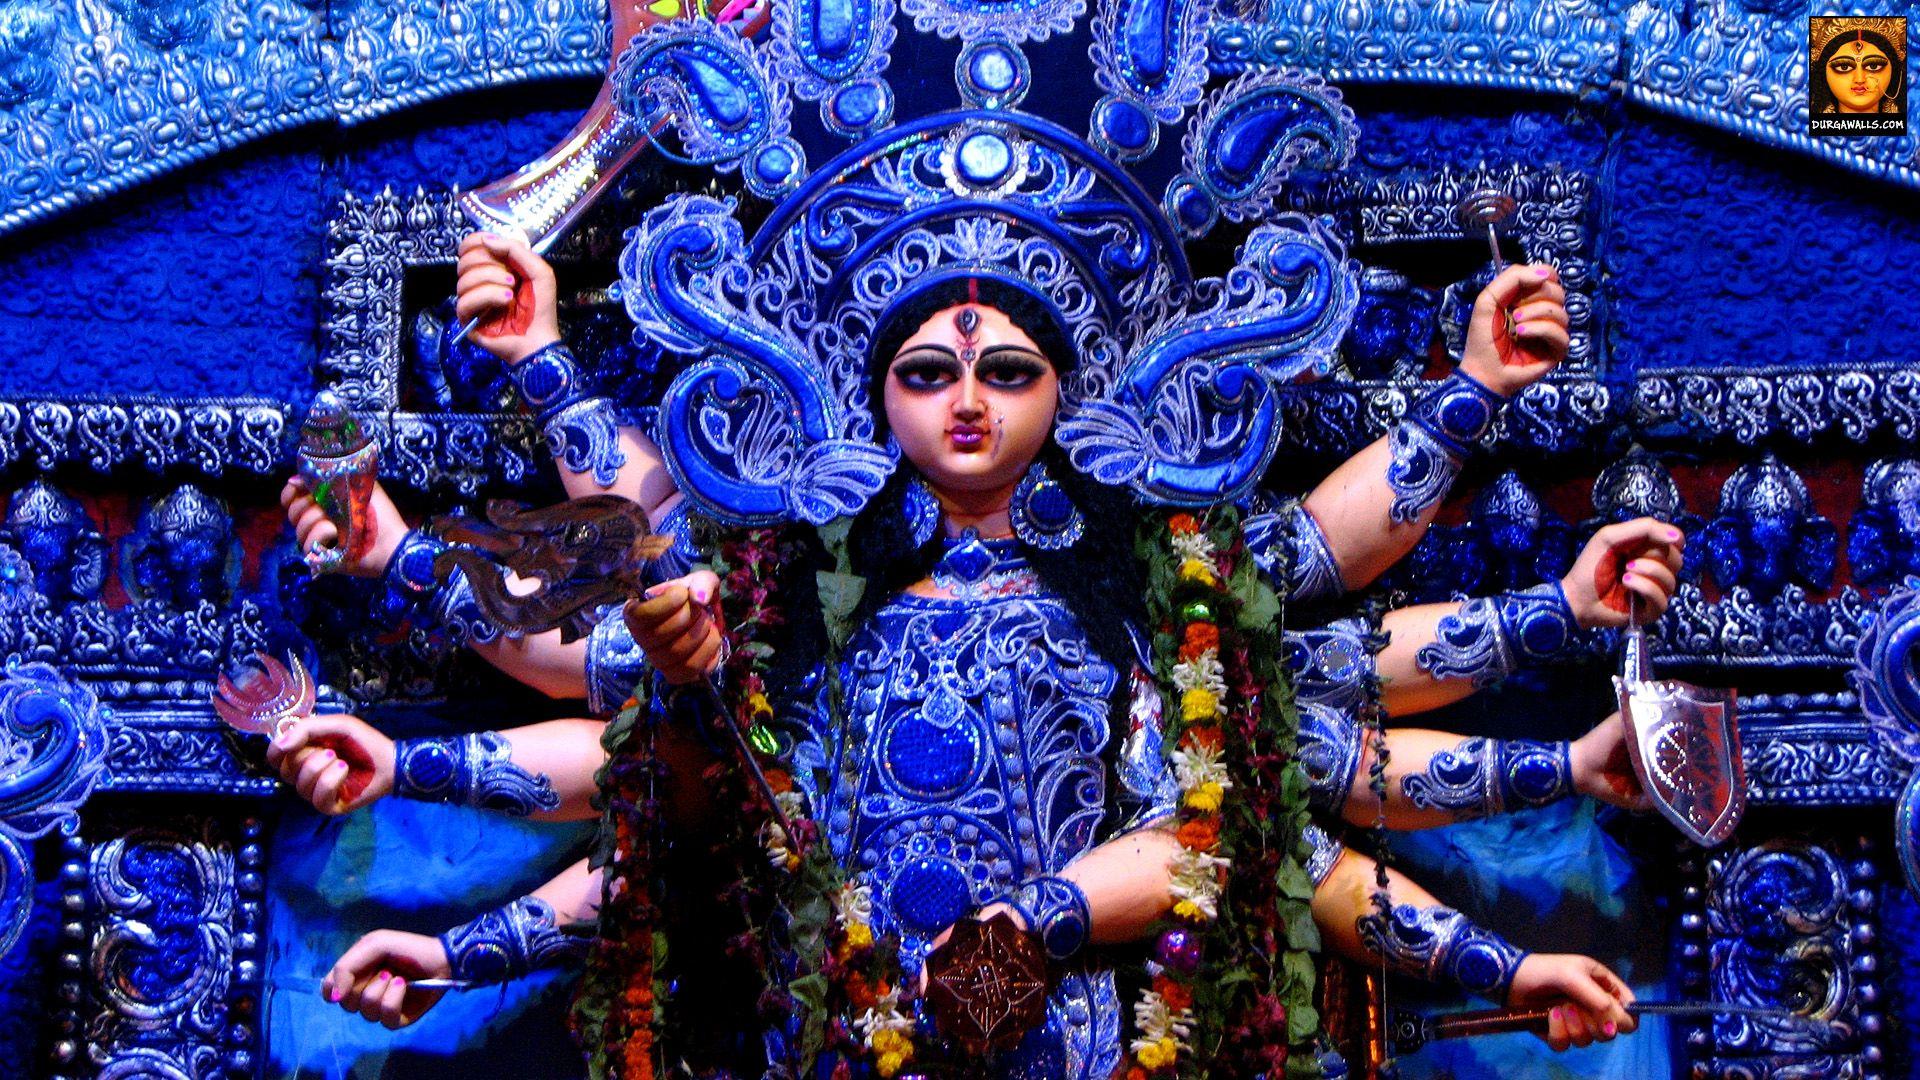 HD Wallpaper of Durga Ma. Maa durga HD wallpaper, Durga puja